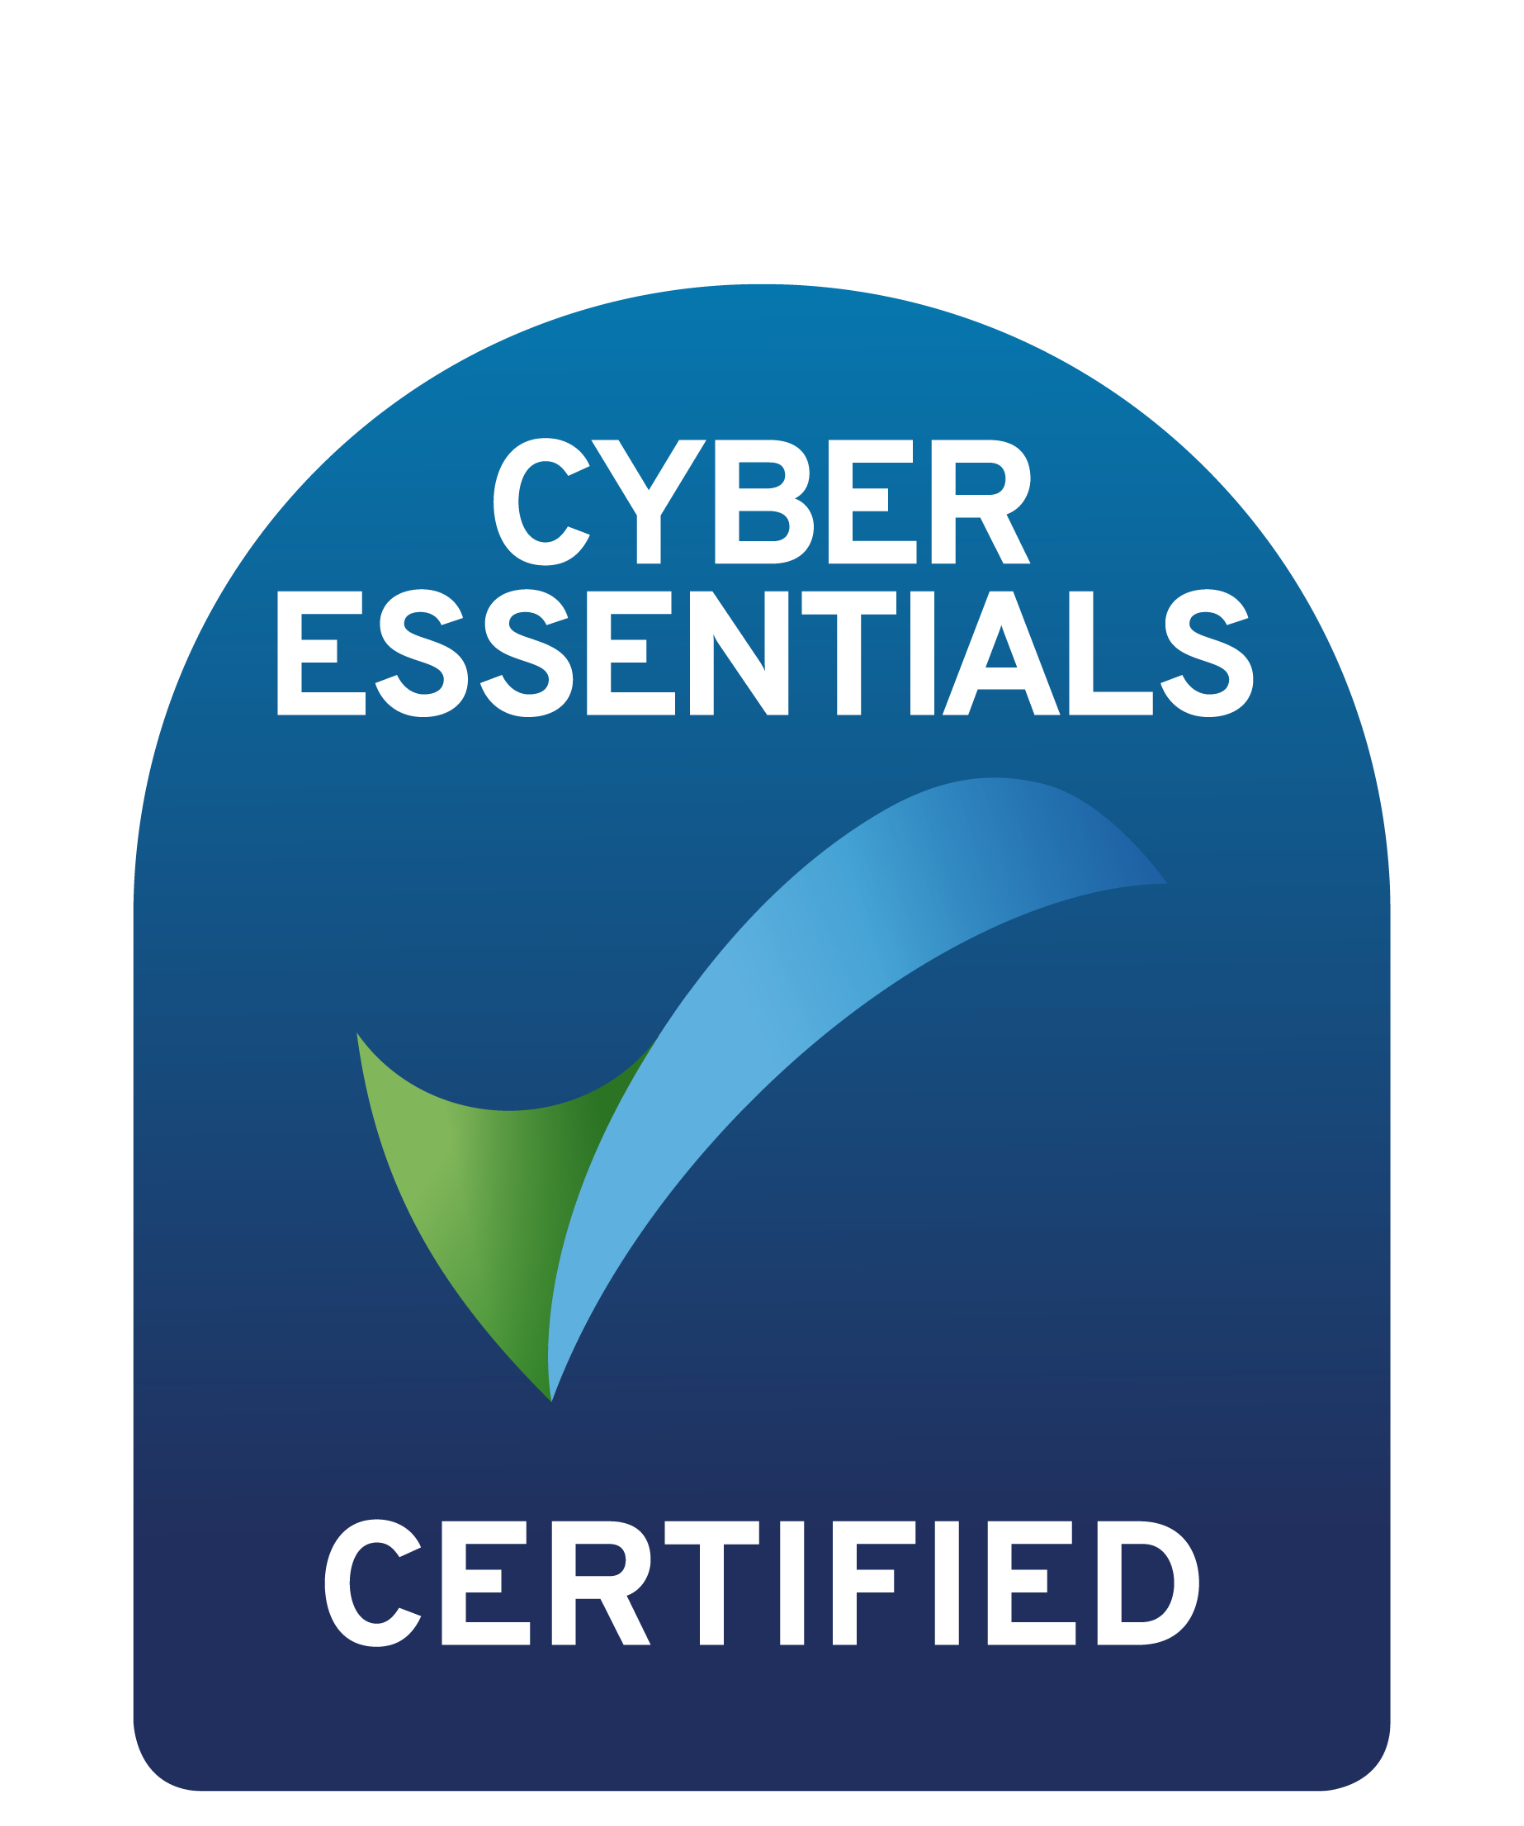 Cyber essentials logo - padding (1)